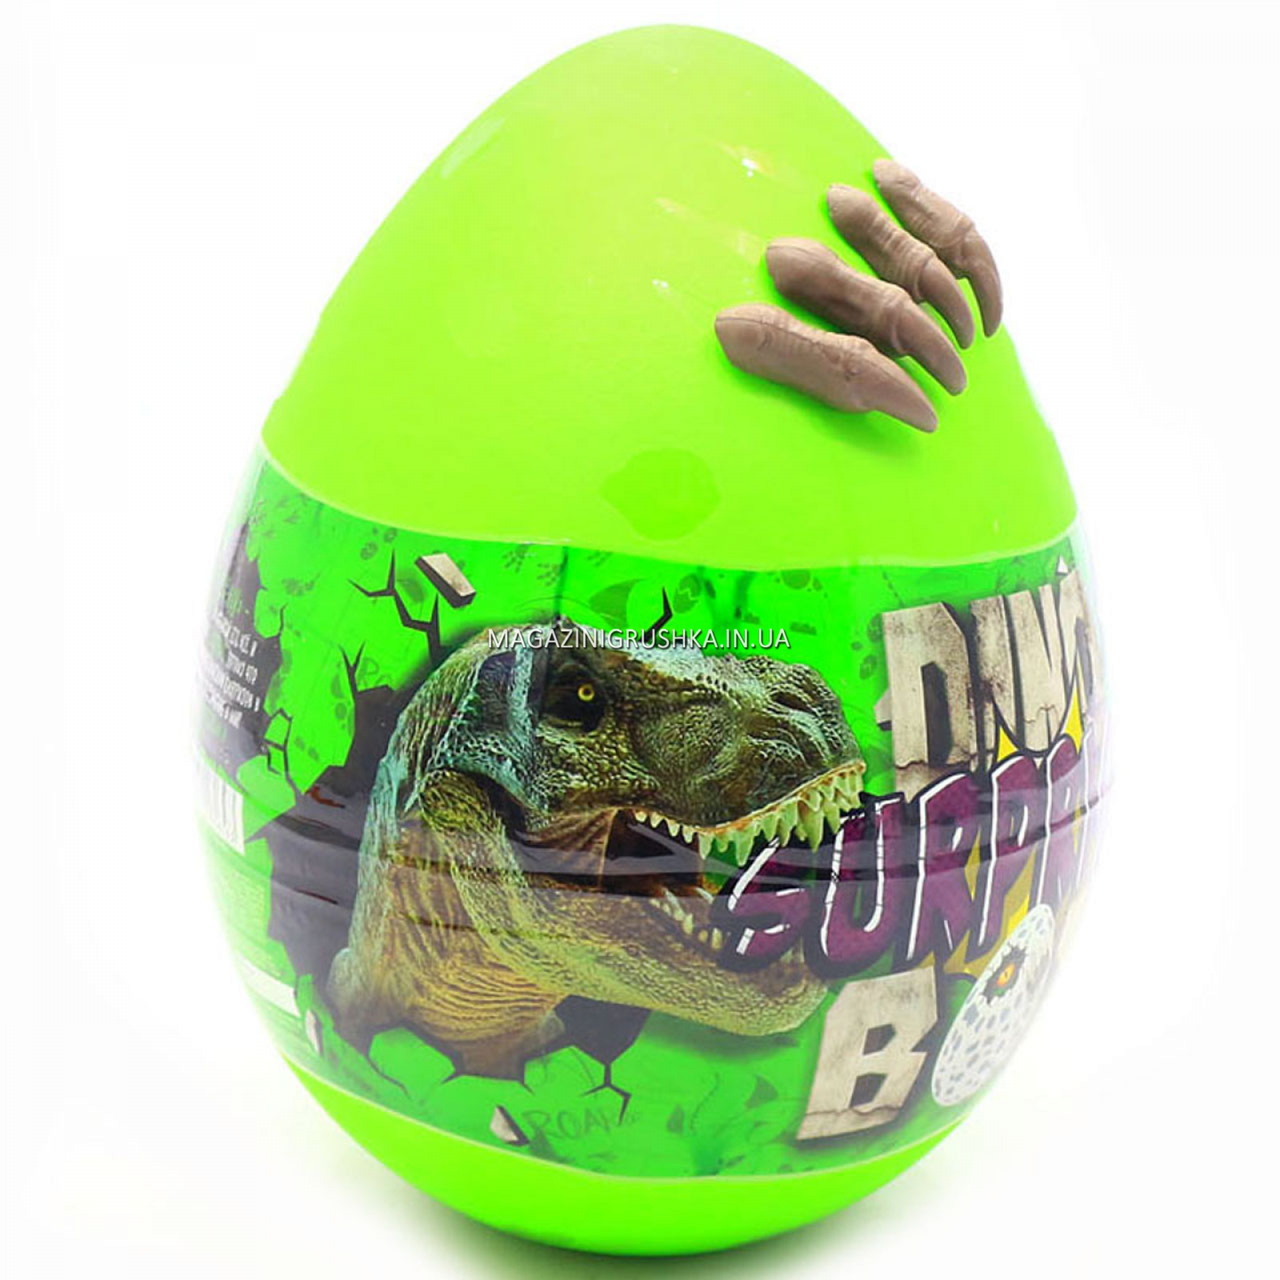 Яйца динозавров купить. Danko Toys яйцо динозавра. Dino wow Box яйцо. Данко Тойс Dino wow яйцо.